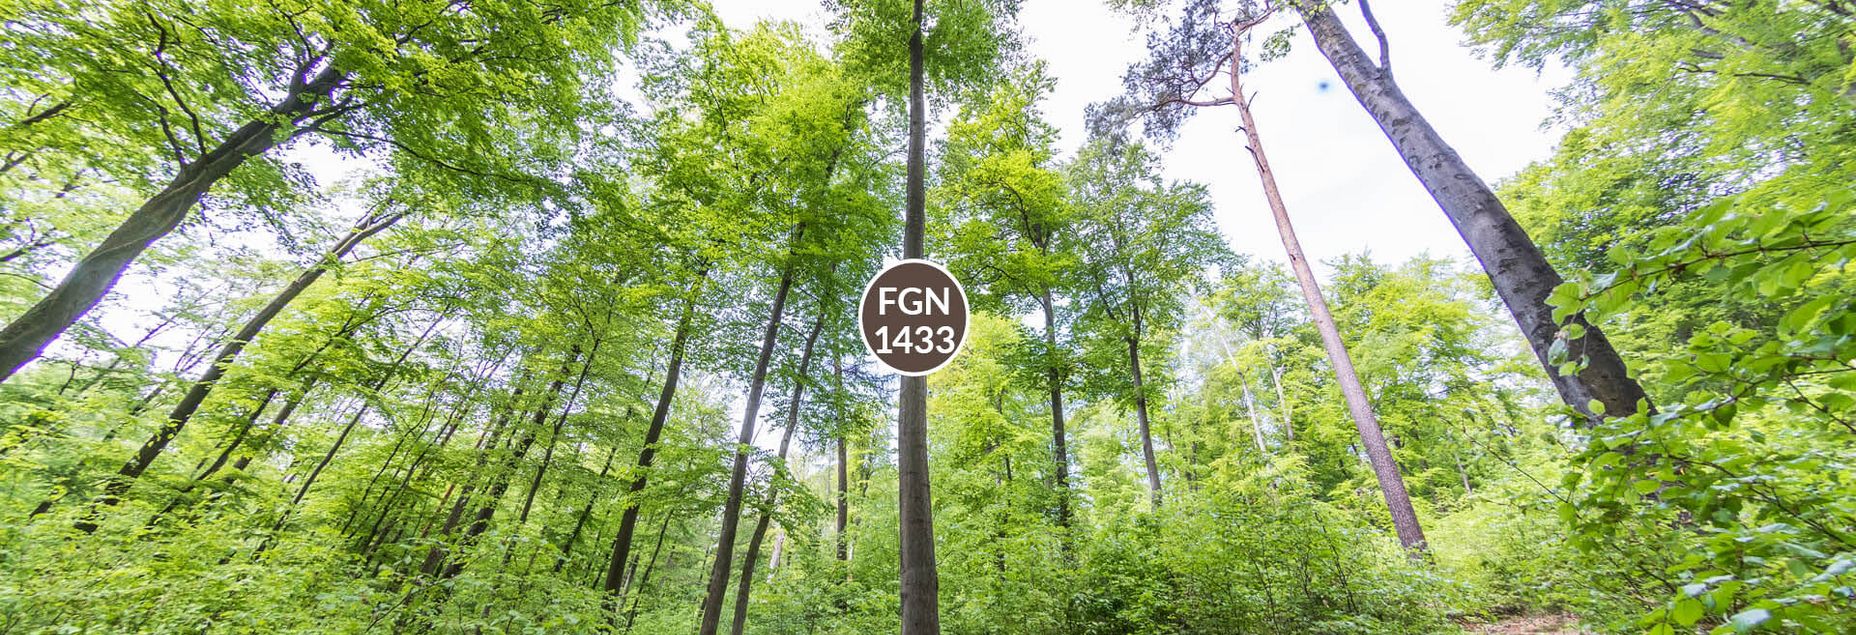 Baum FGN 1433 - Fisheyeperspektive